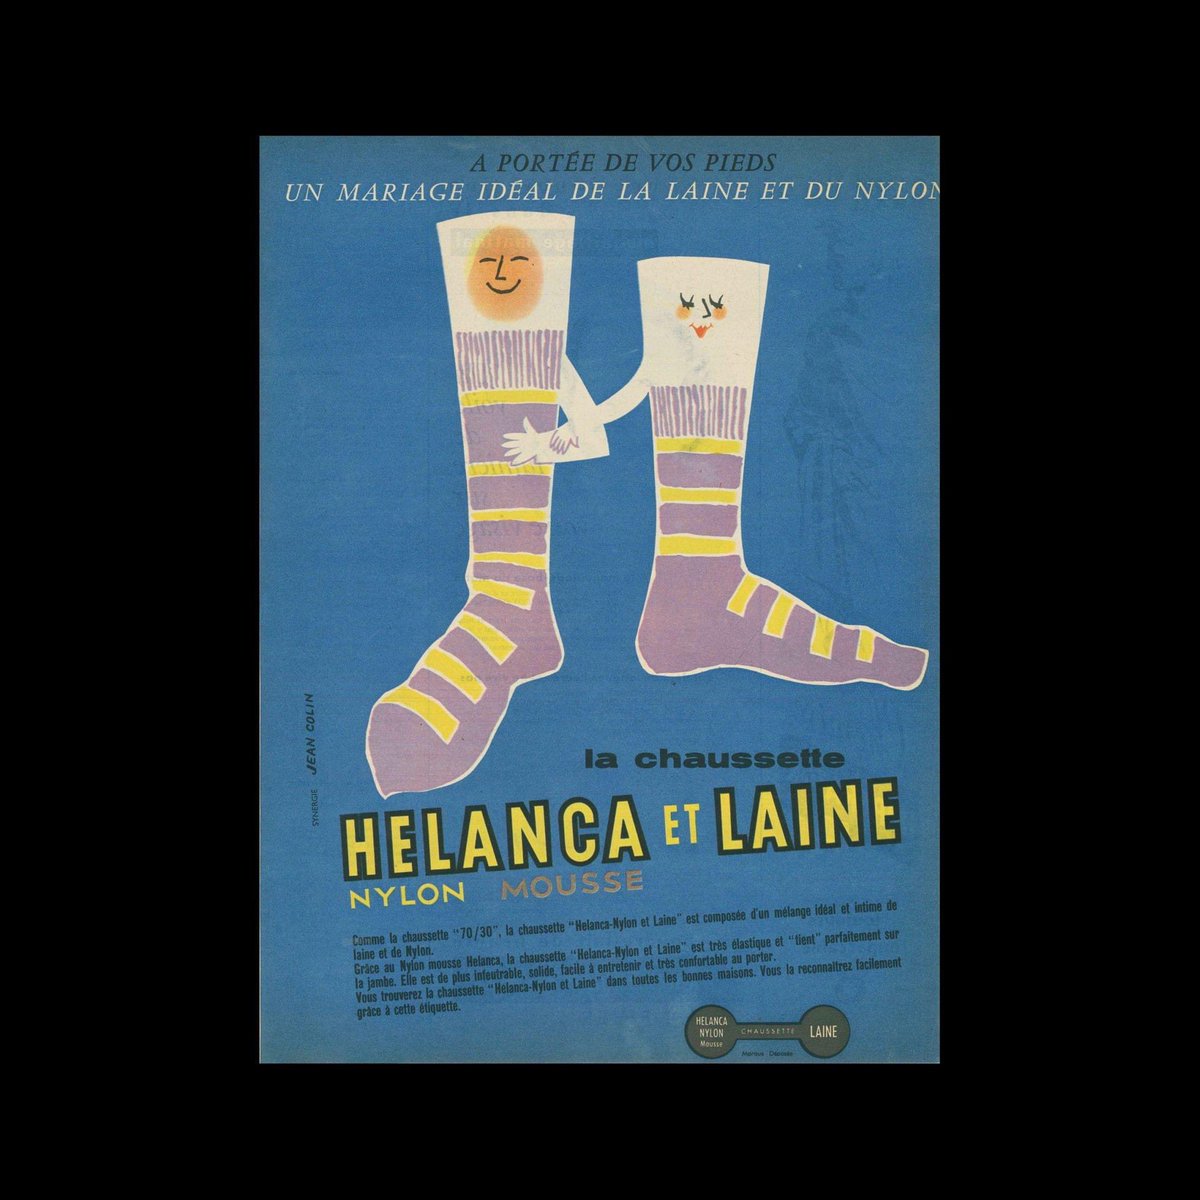 Helanca & Laine, Advertisement, 1957. Designed by Jean Colin. #jeancolin #vintageadvertising
designreviewed.com/artefacts/hela…